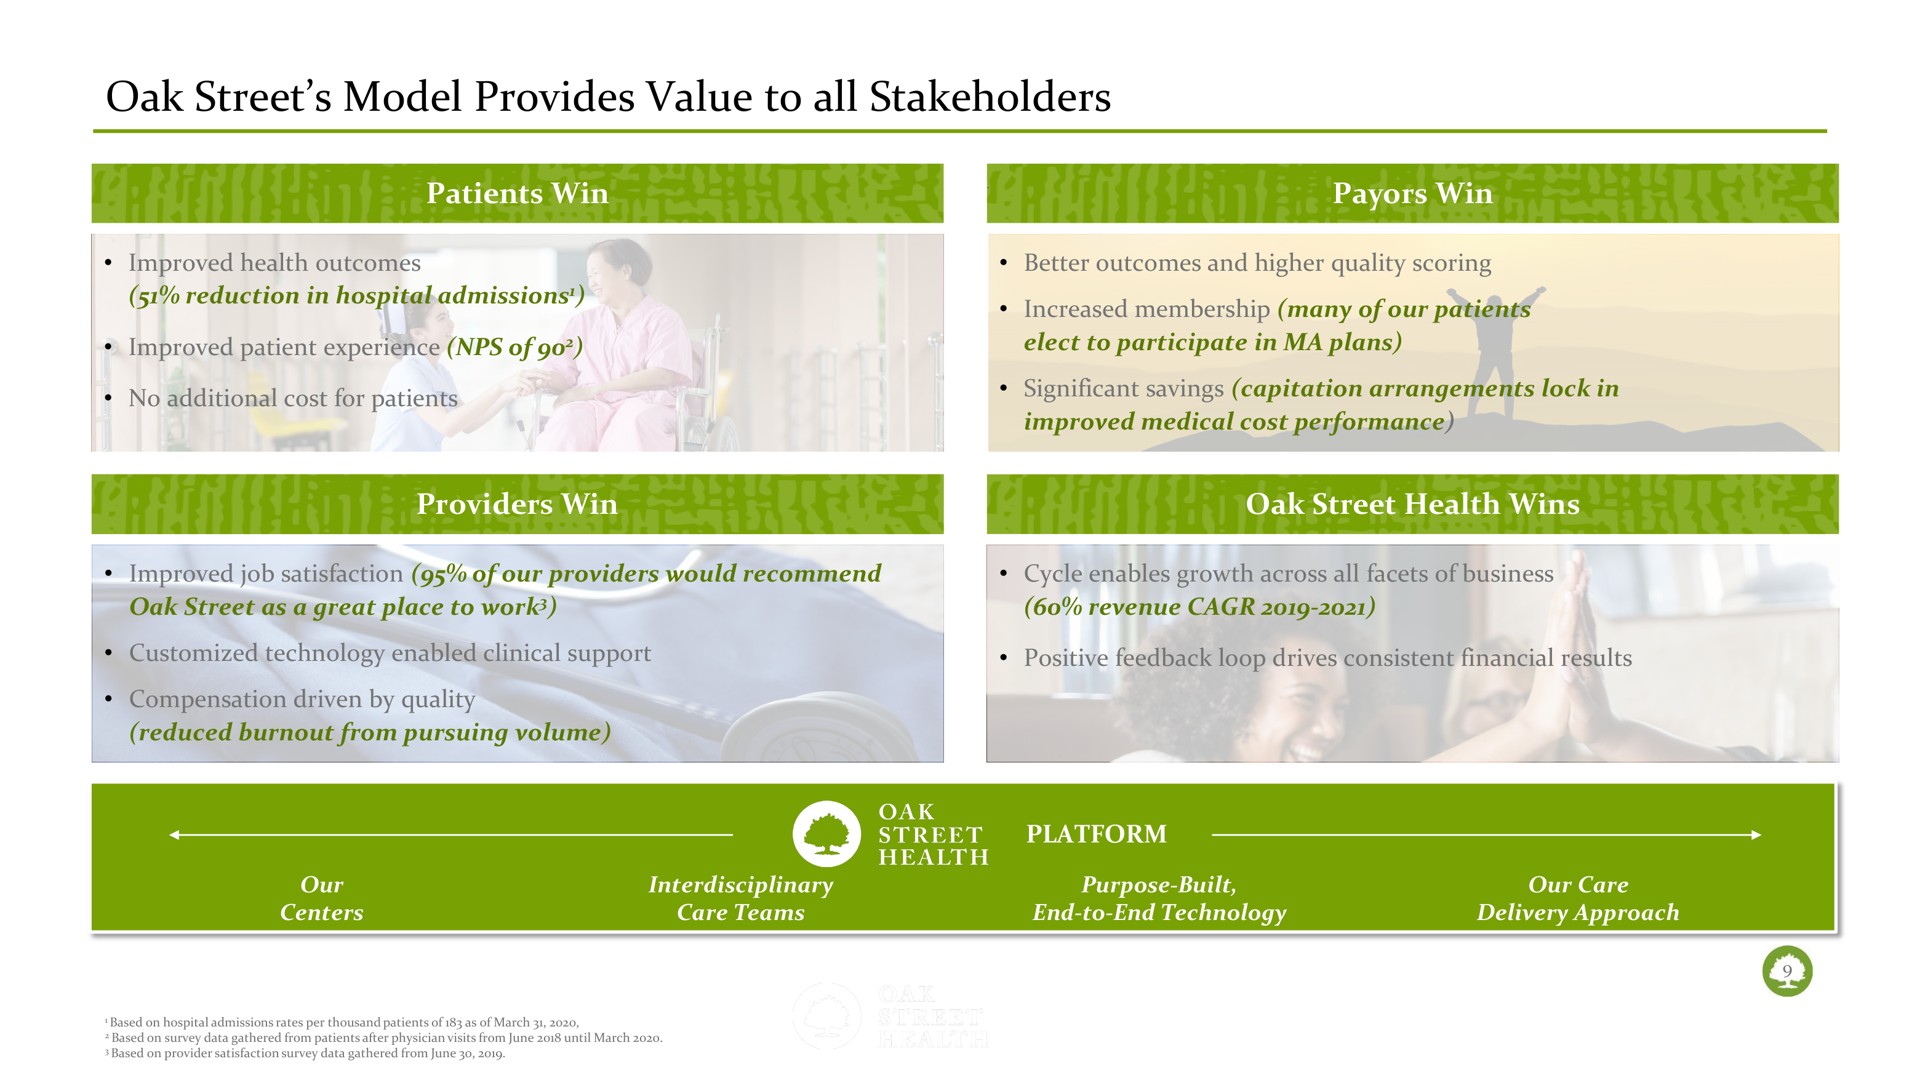 oak street model provides value to all stakeholders | Oak Street Health